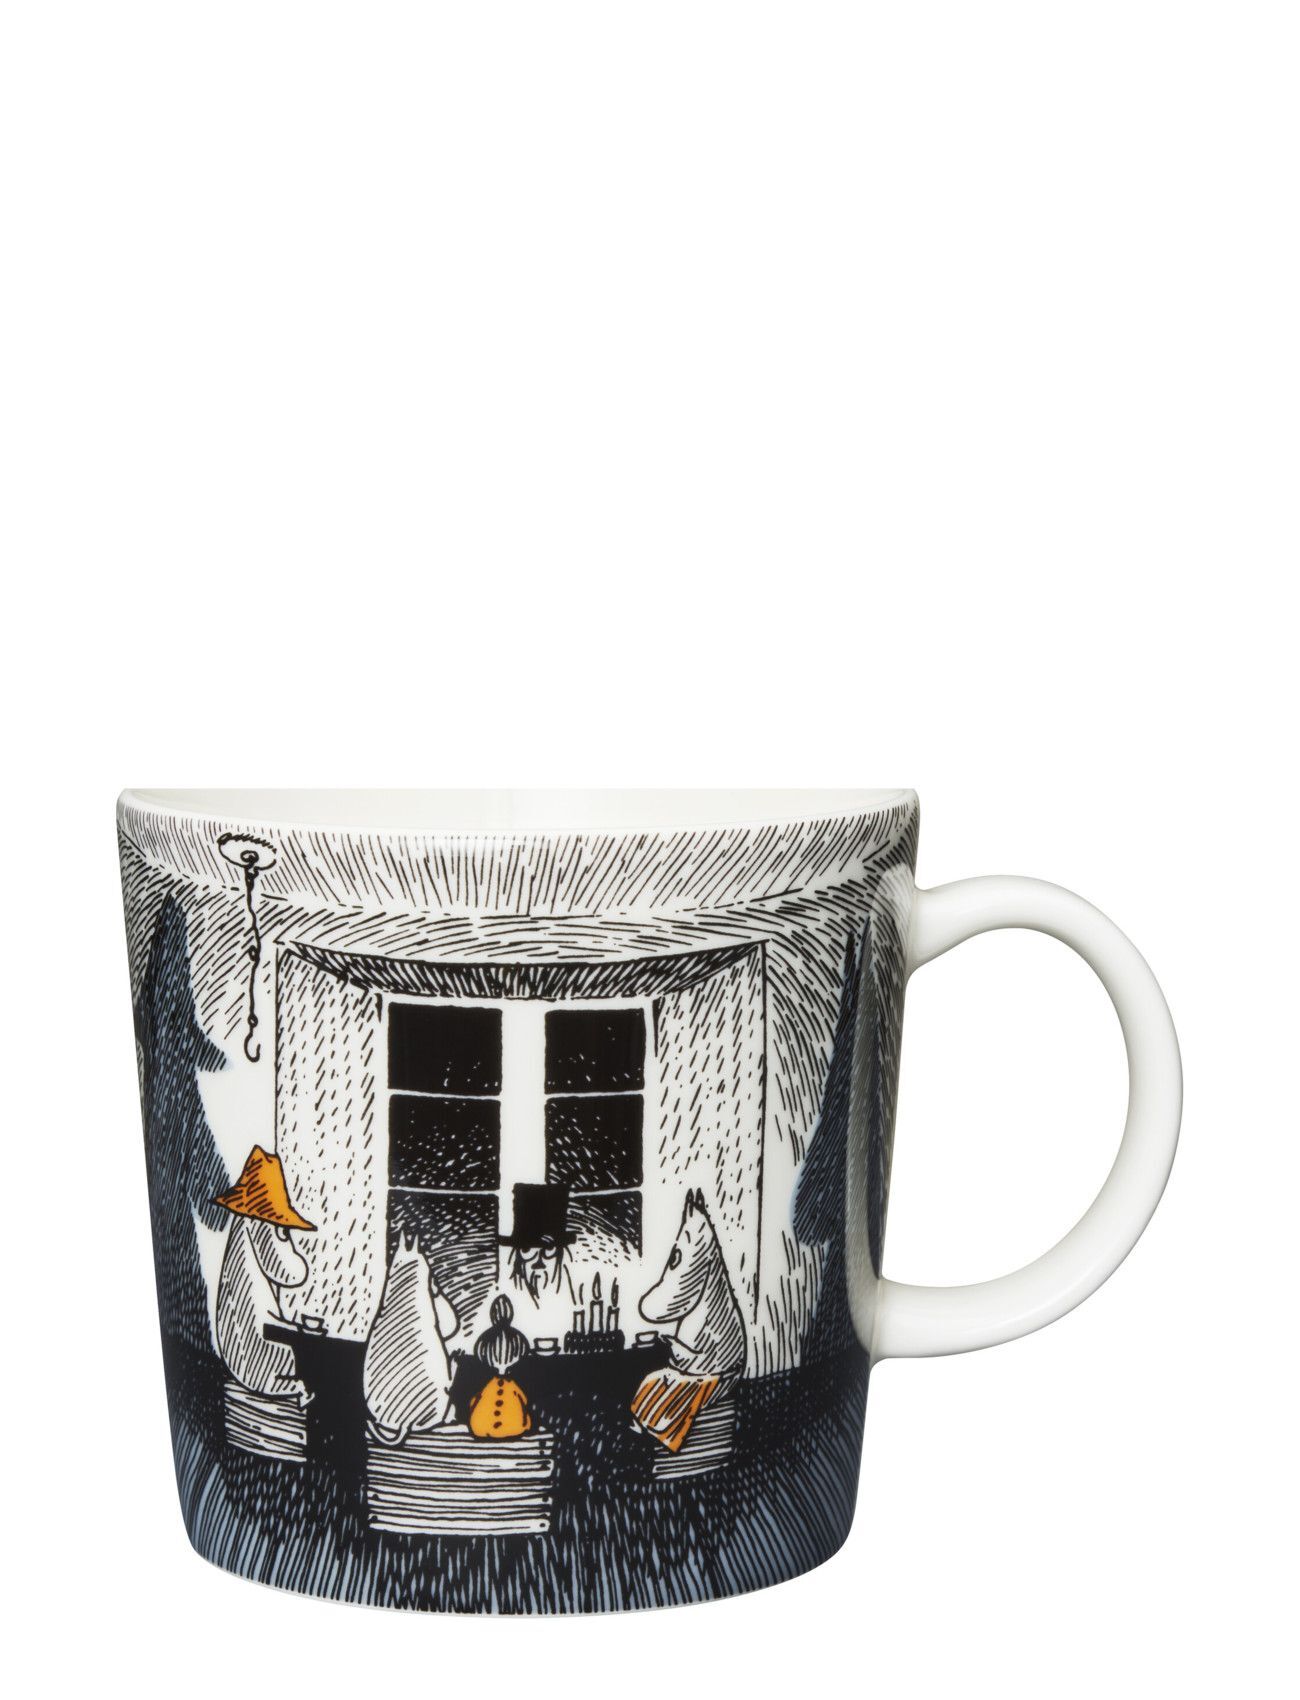 Arabia Moomin Mug 0,3L True To Its Origins Home Tableware Cups & Mugs Coffee Cups Grå Arabia